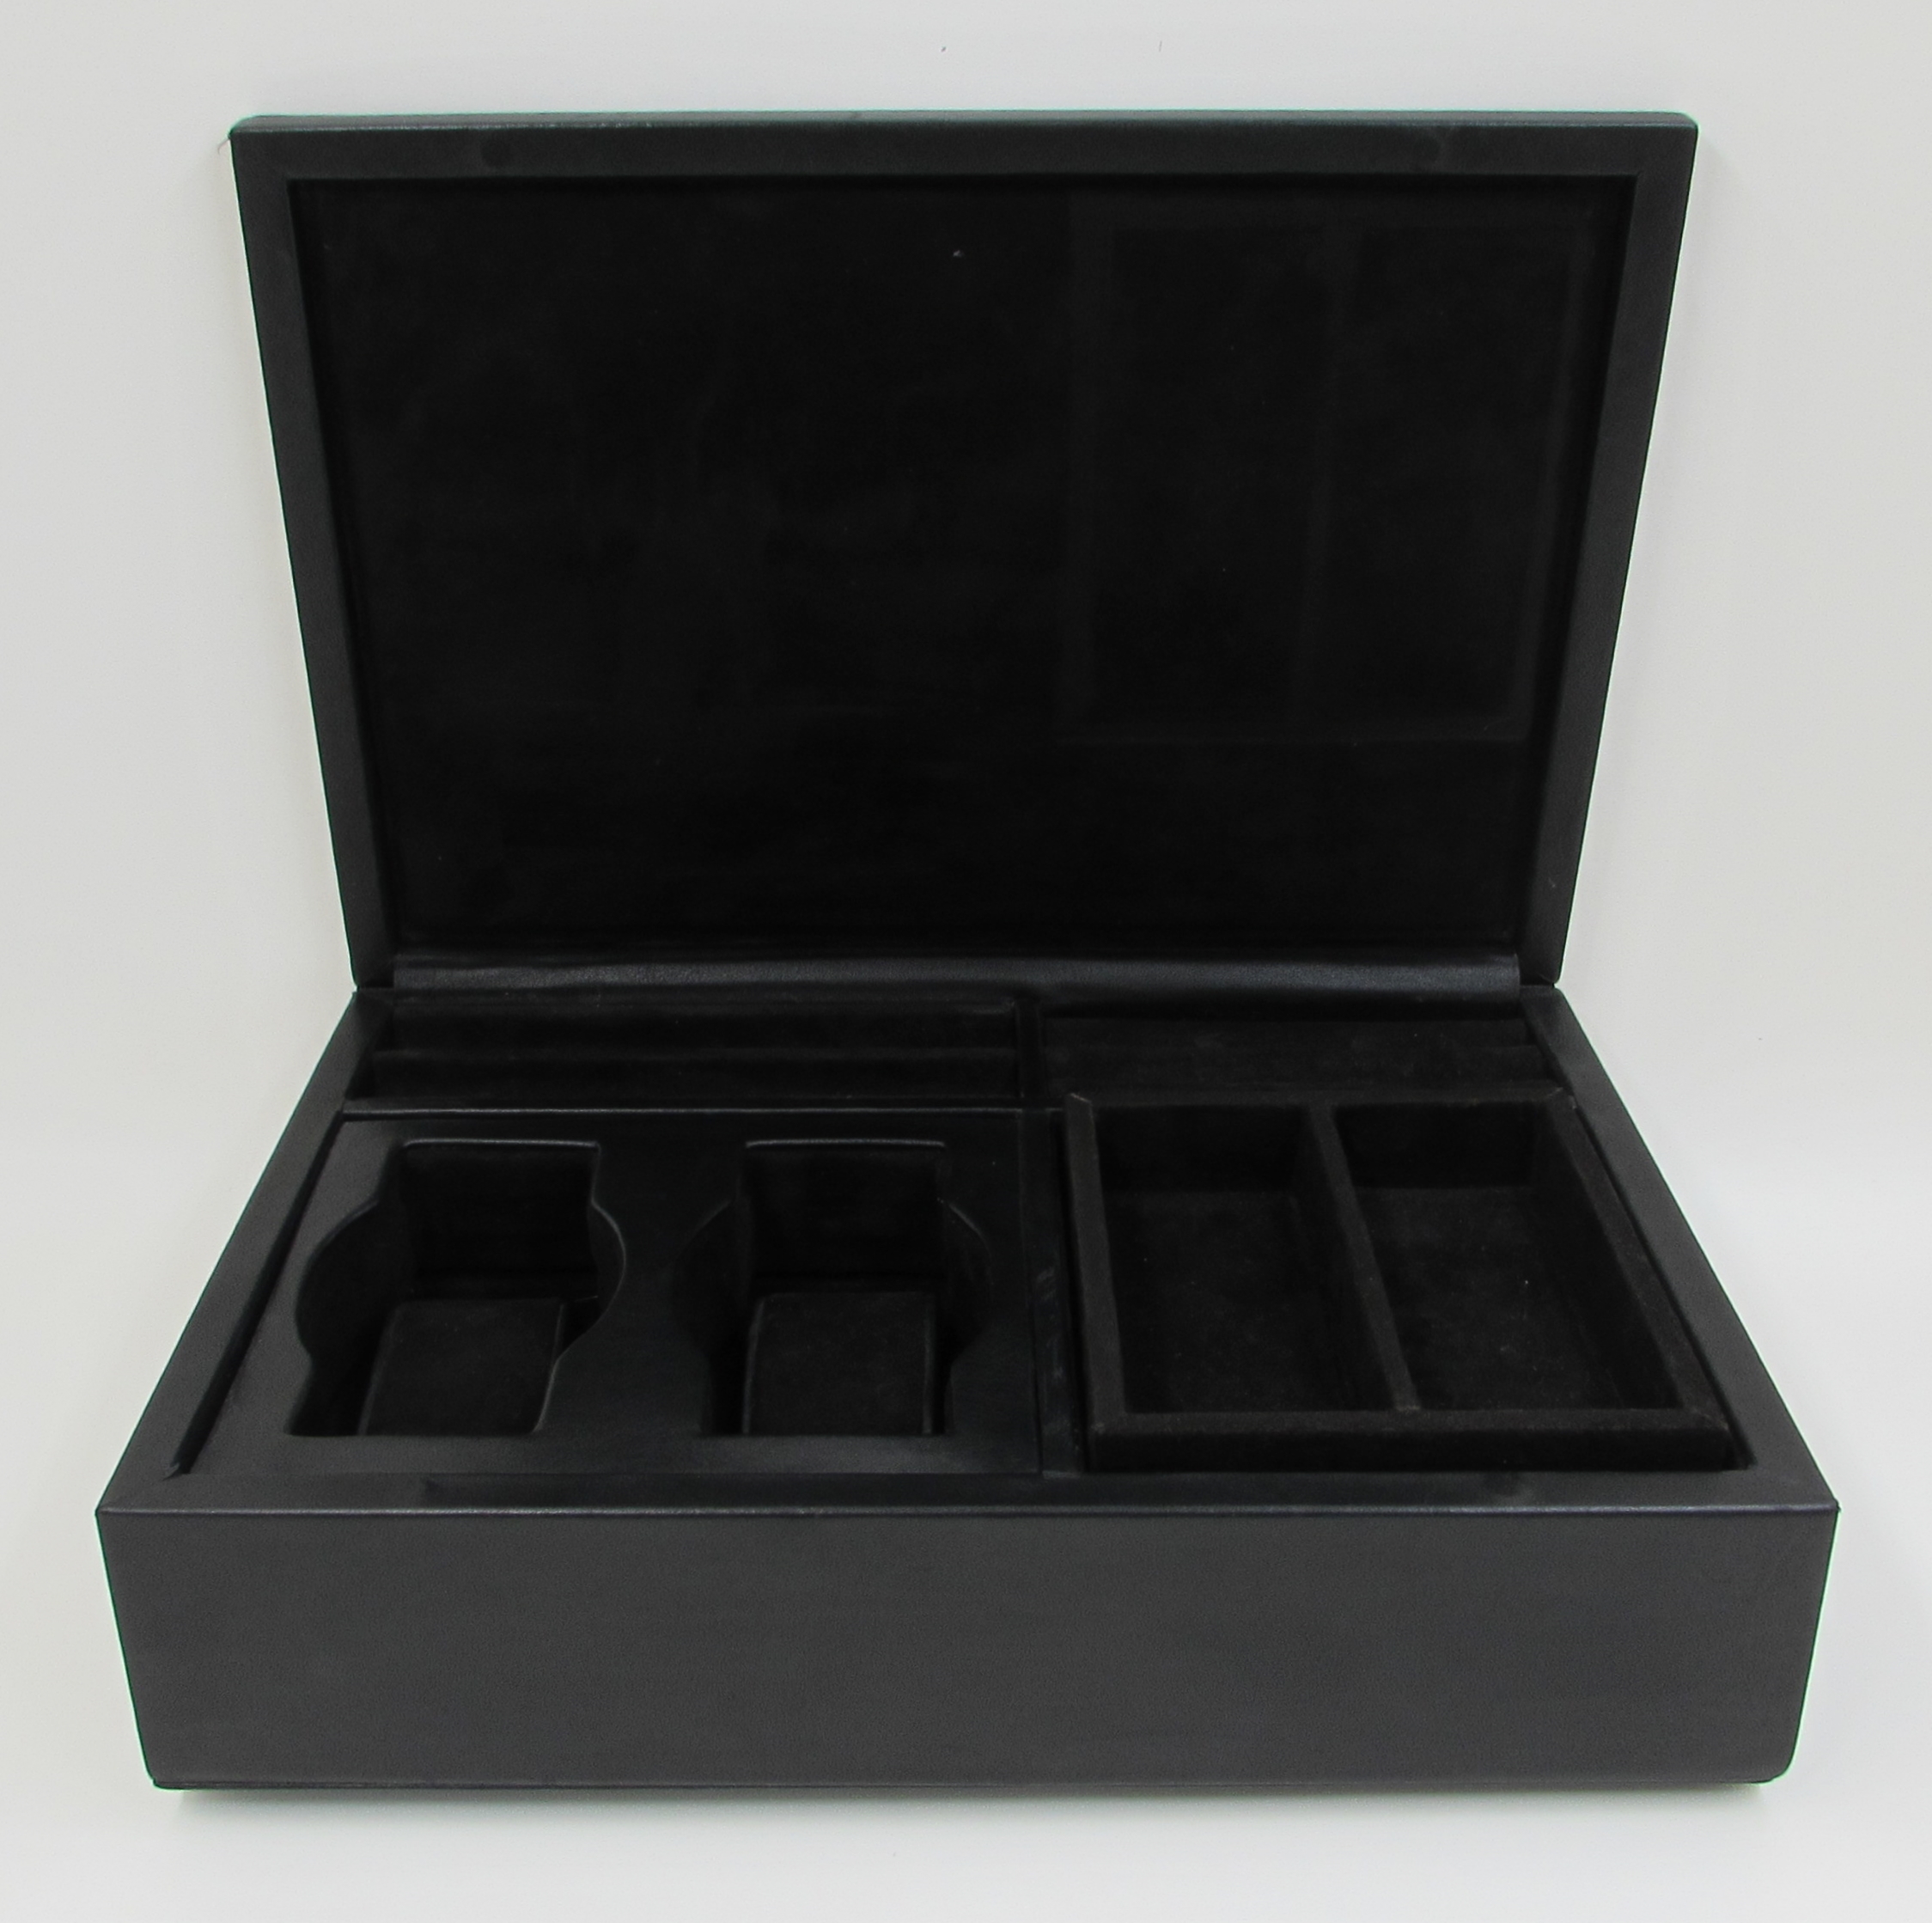 Jewelry Box - Black Stromboli Leather